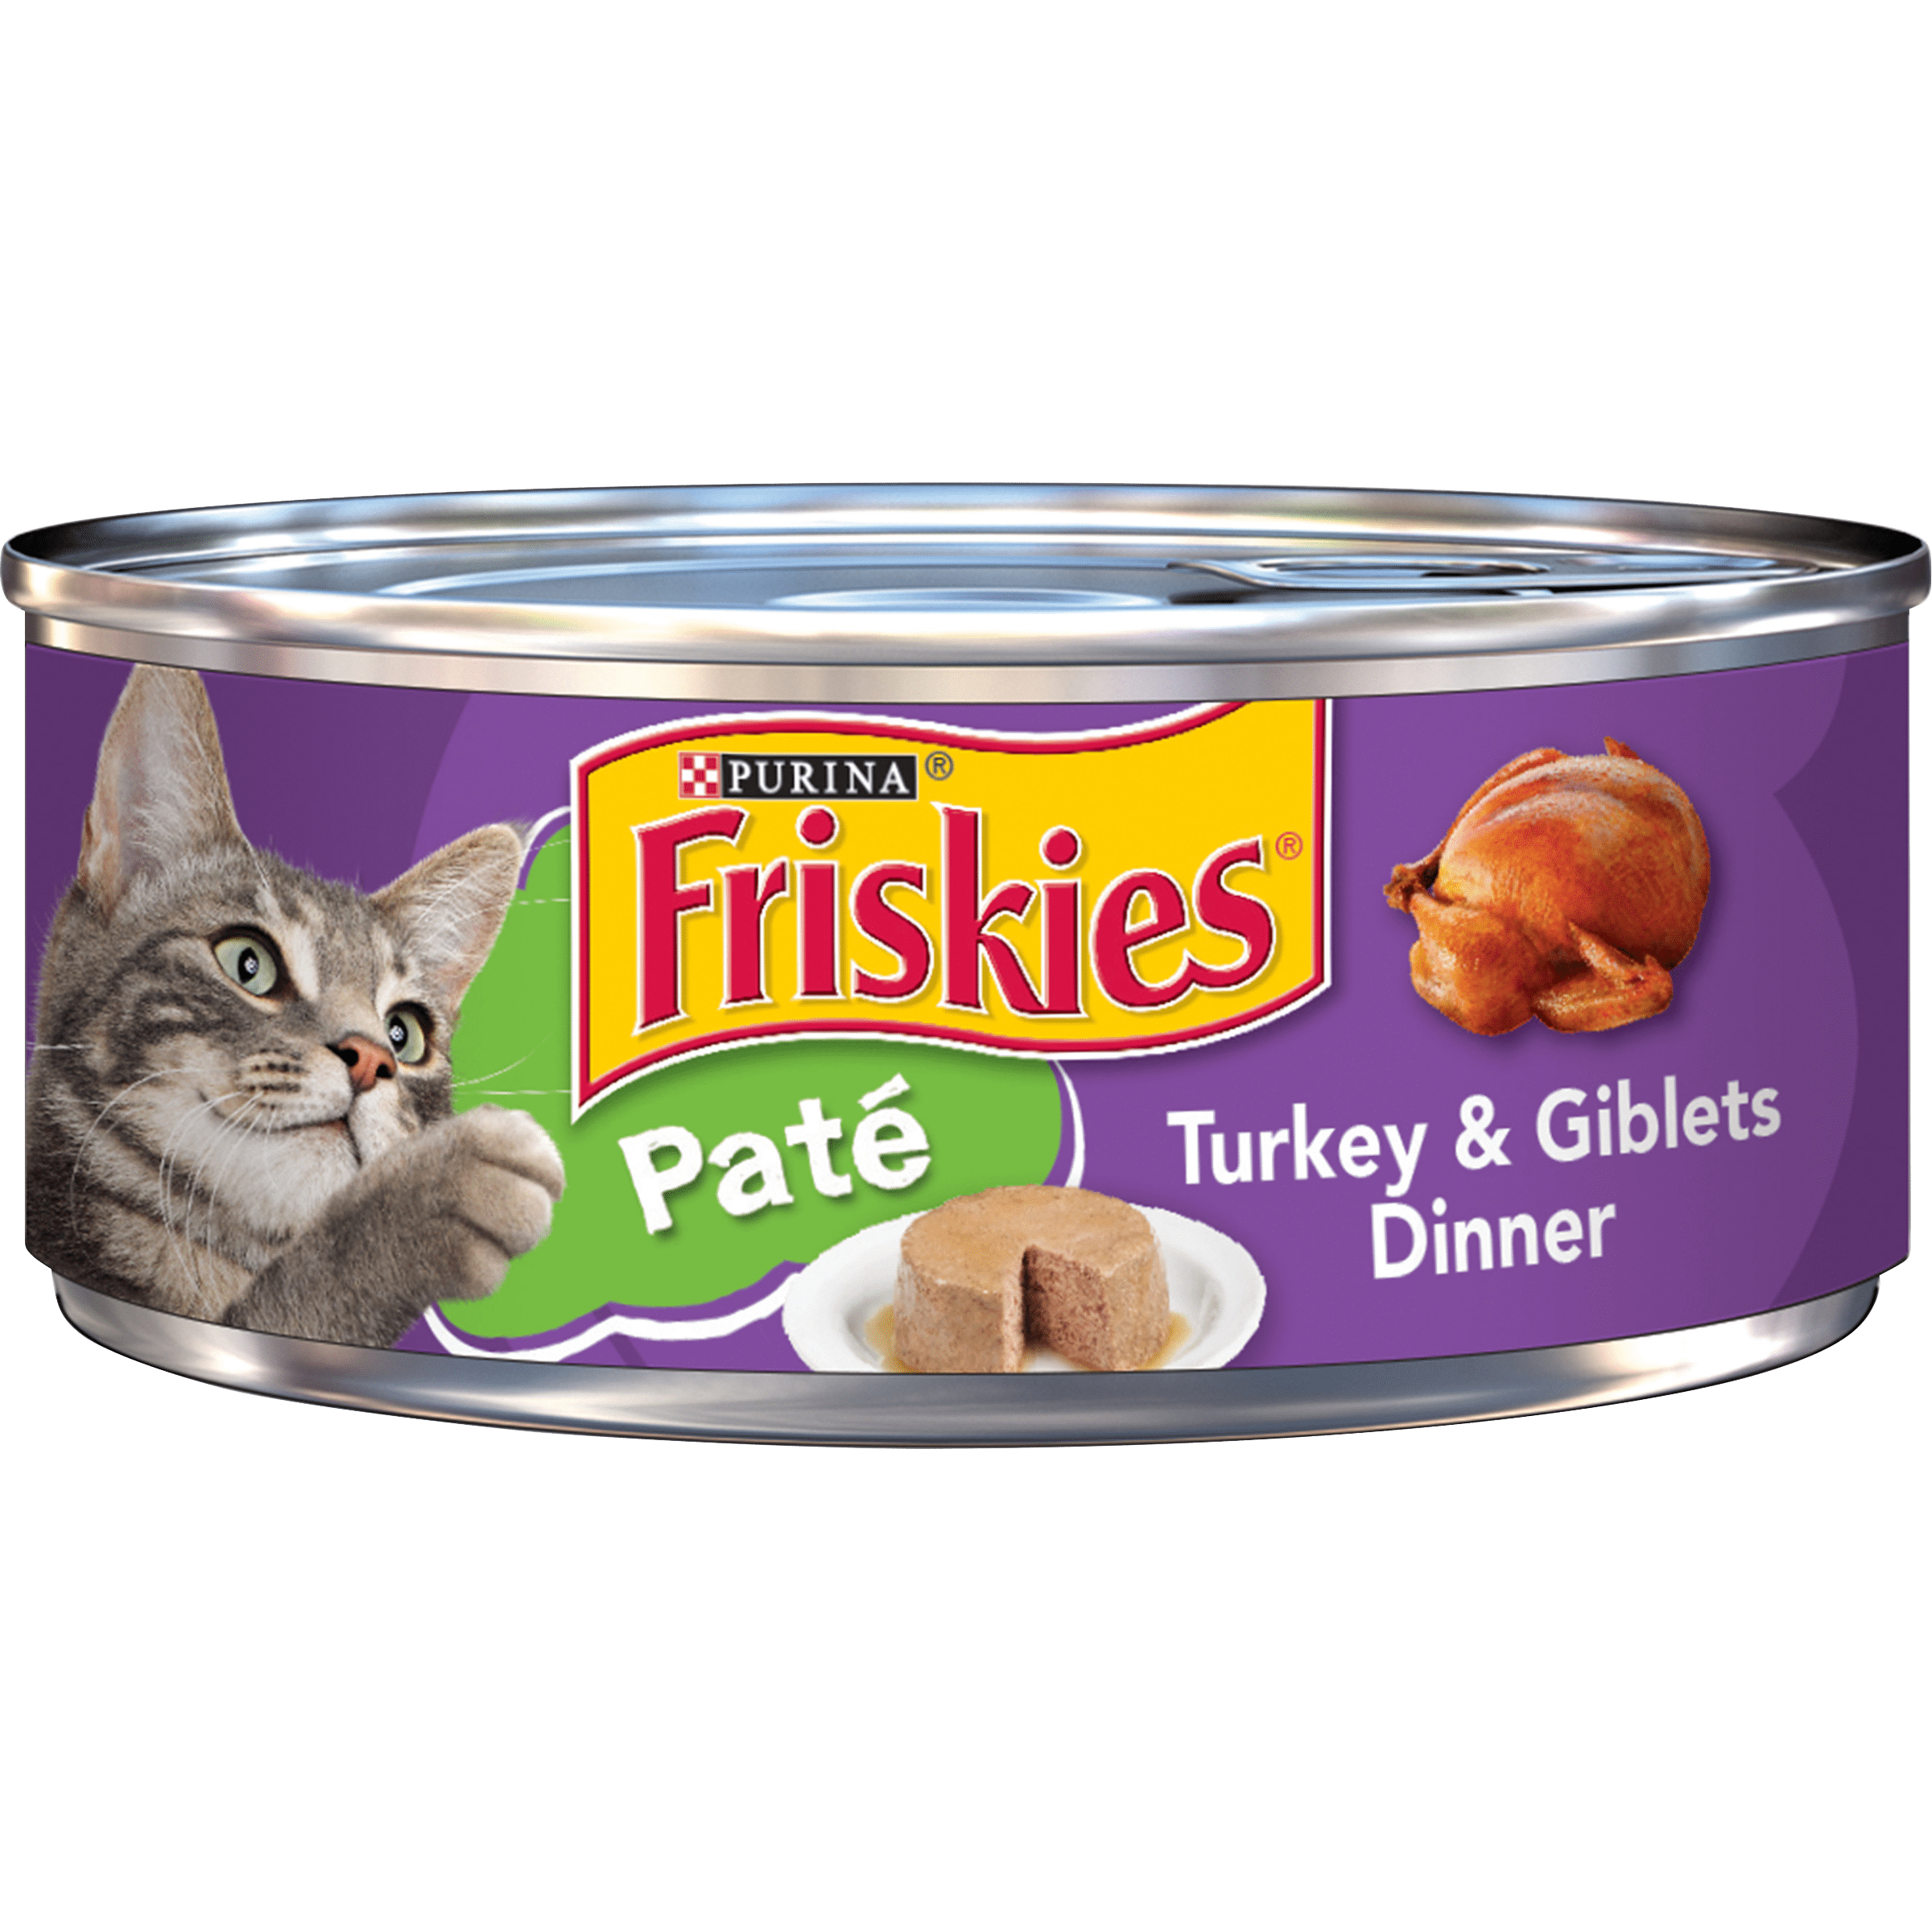 Friskies Pate Wet Cat Food, Turkey & Giblets Dinner, 5.5 oz. Can